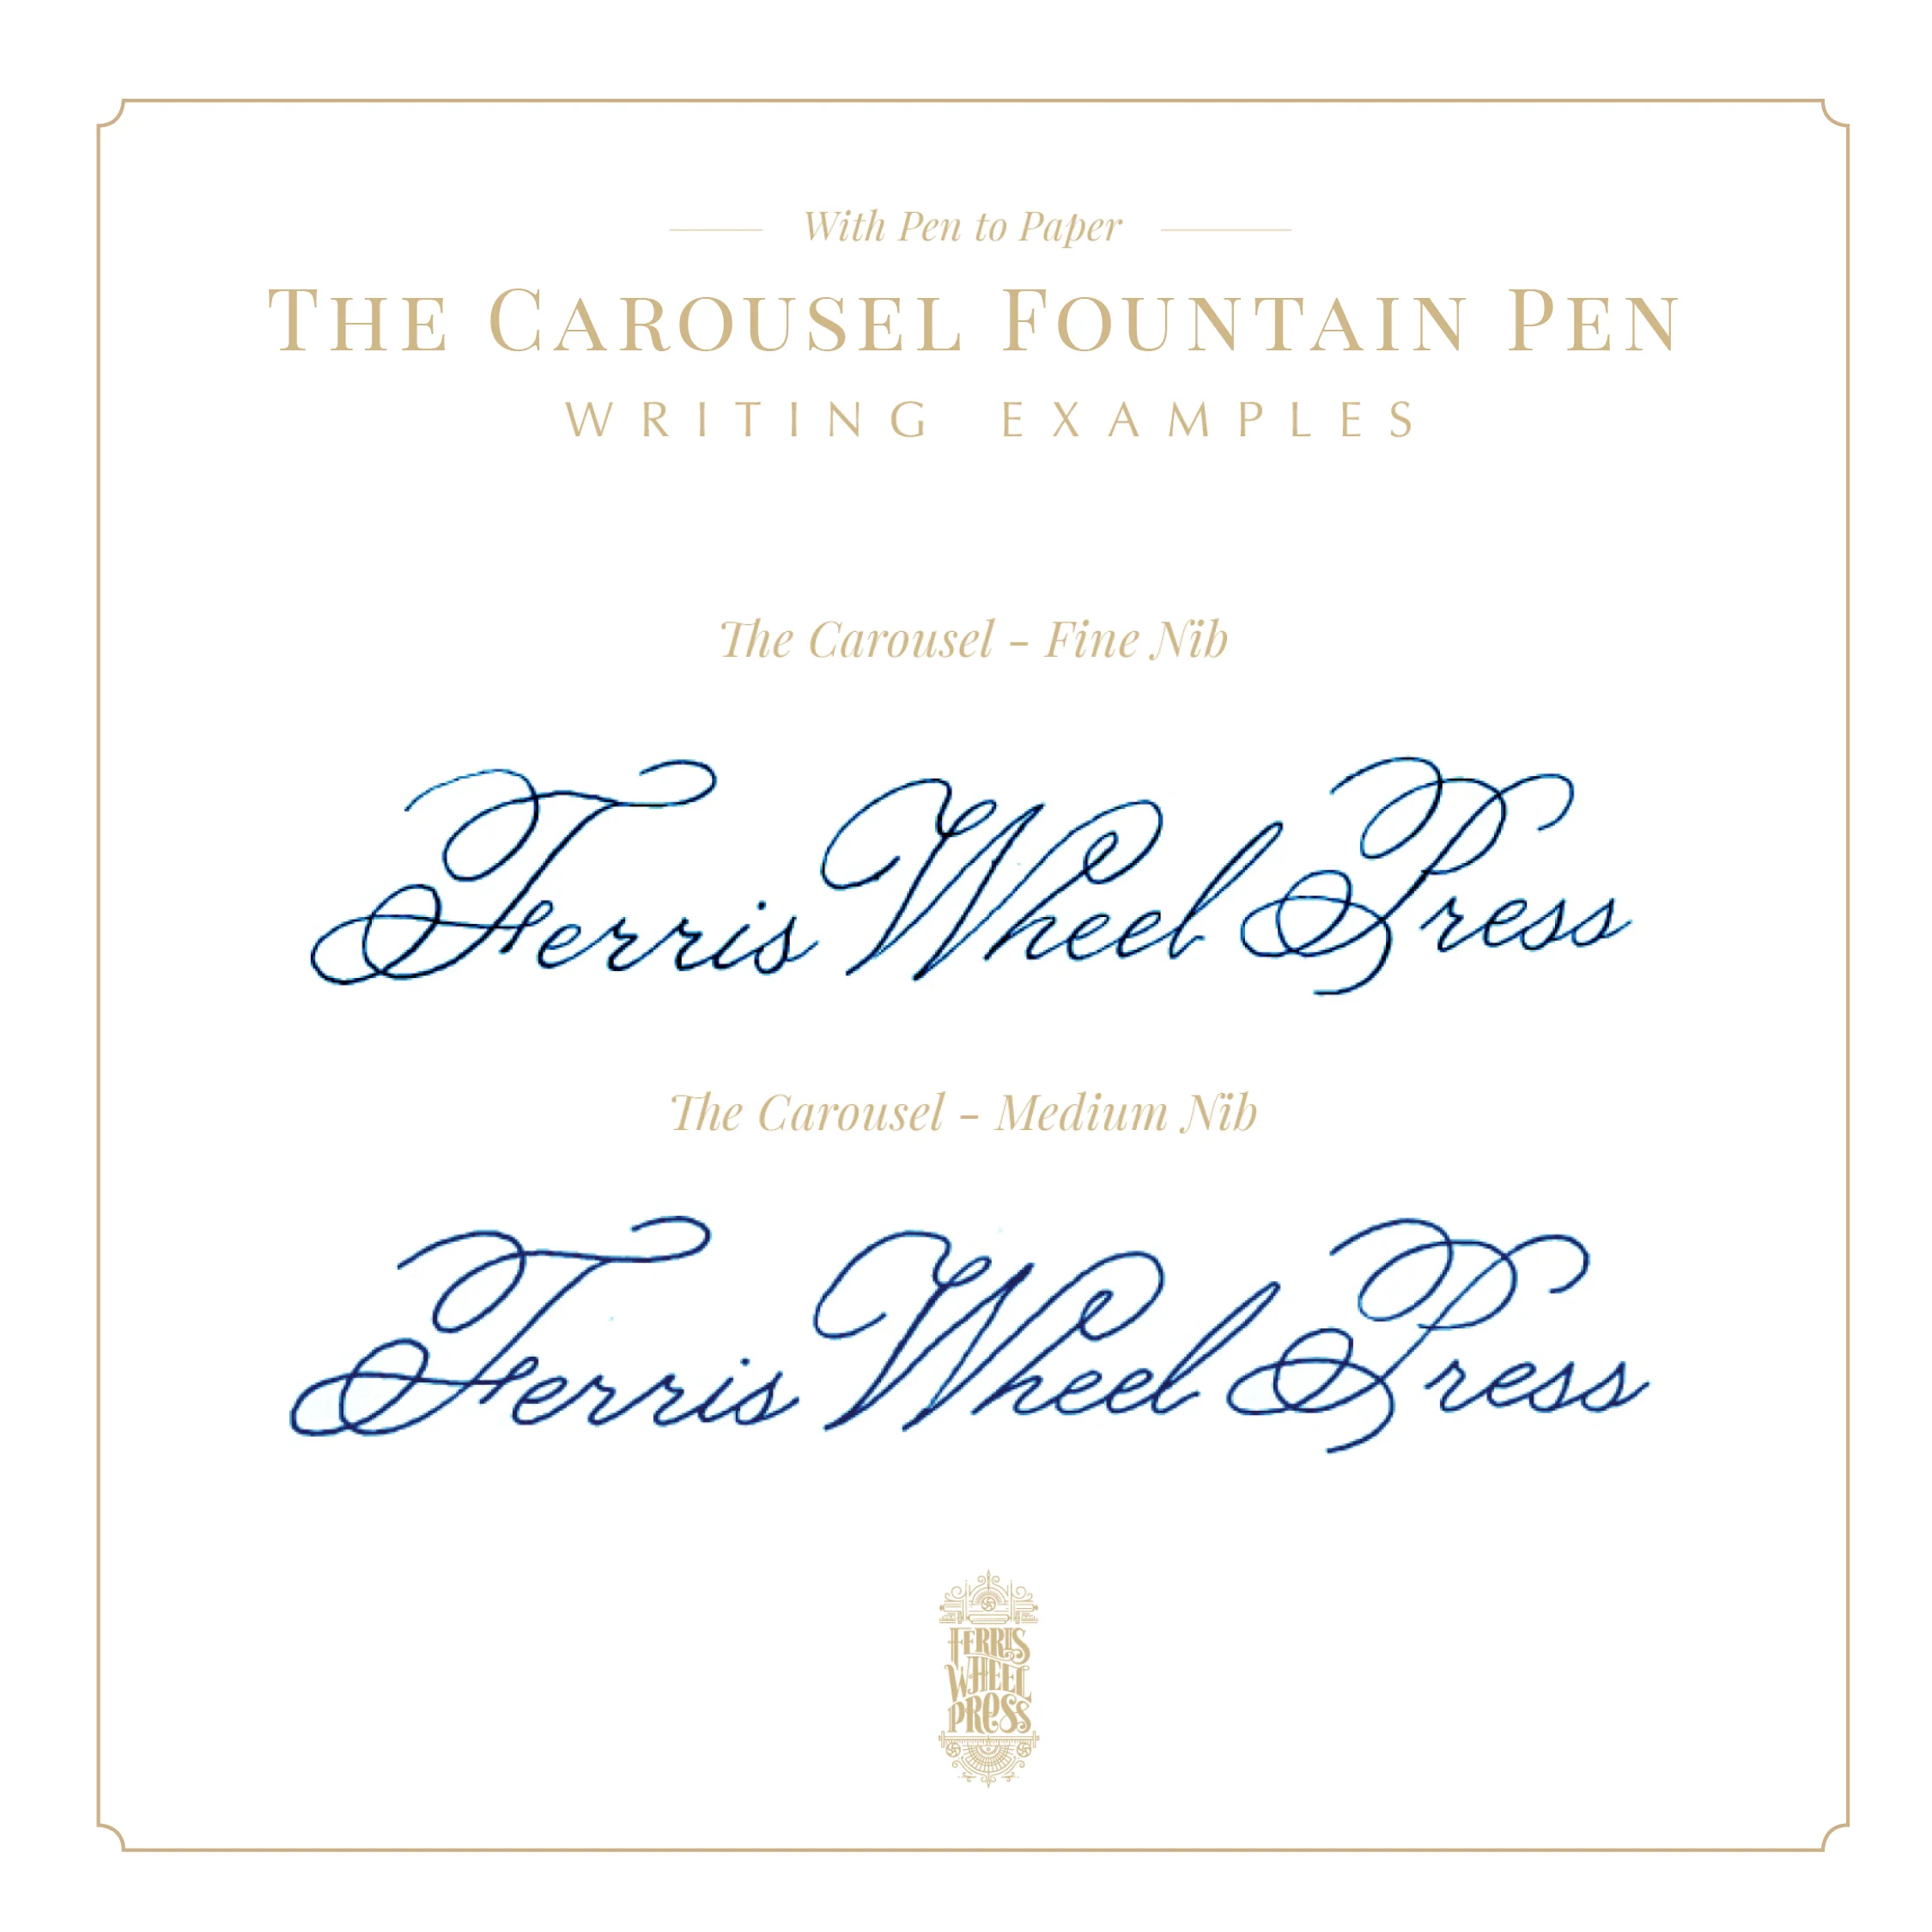 Ferris Wheel Press Limited Edition - The Carousel Fountain Pen - Tumultuous Tides